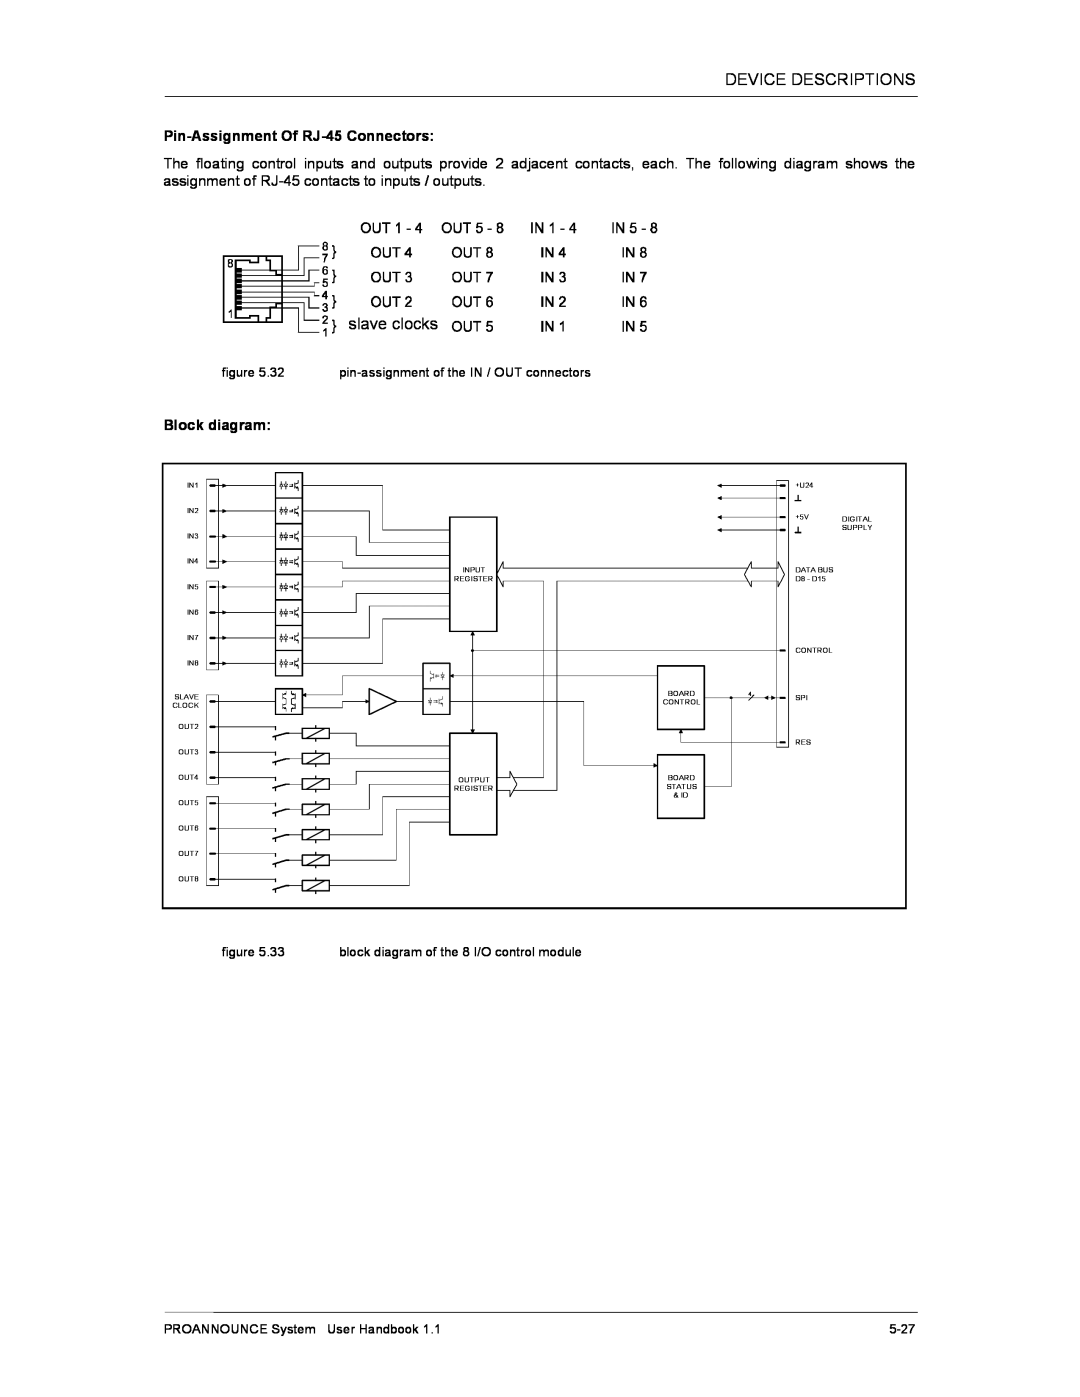 Dynacord DPM 4000 manual Device Descriptions, slave clocks, Pin-AssignmentOf RJ-45Connectors, Block diagram 